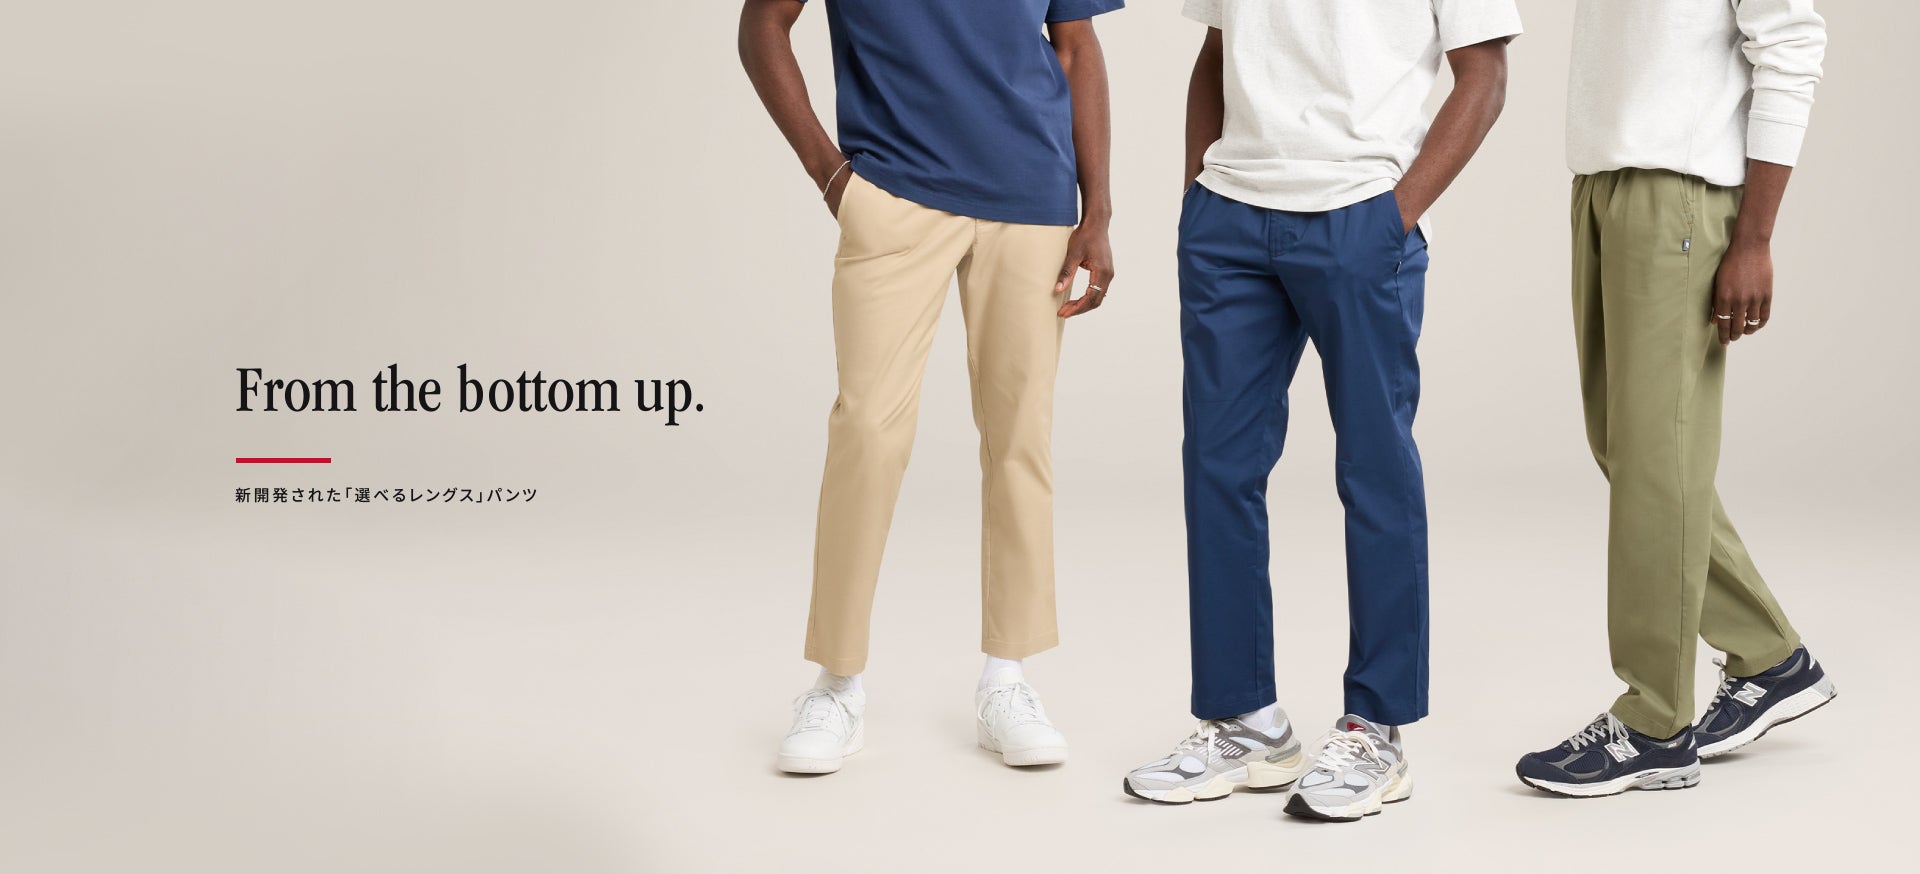 New Balance Pants Collection|新开发的“可选择长度”裤子